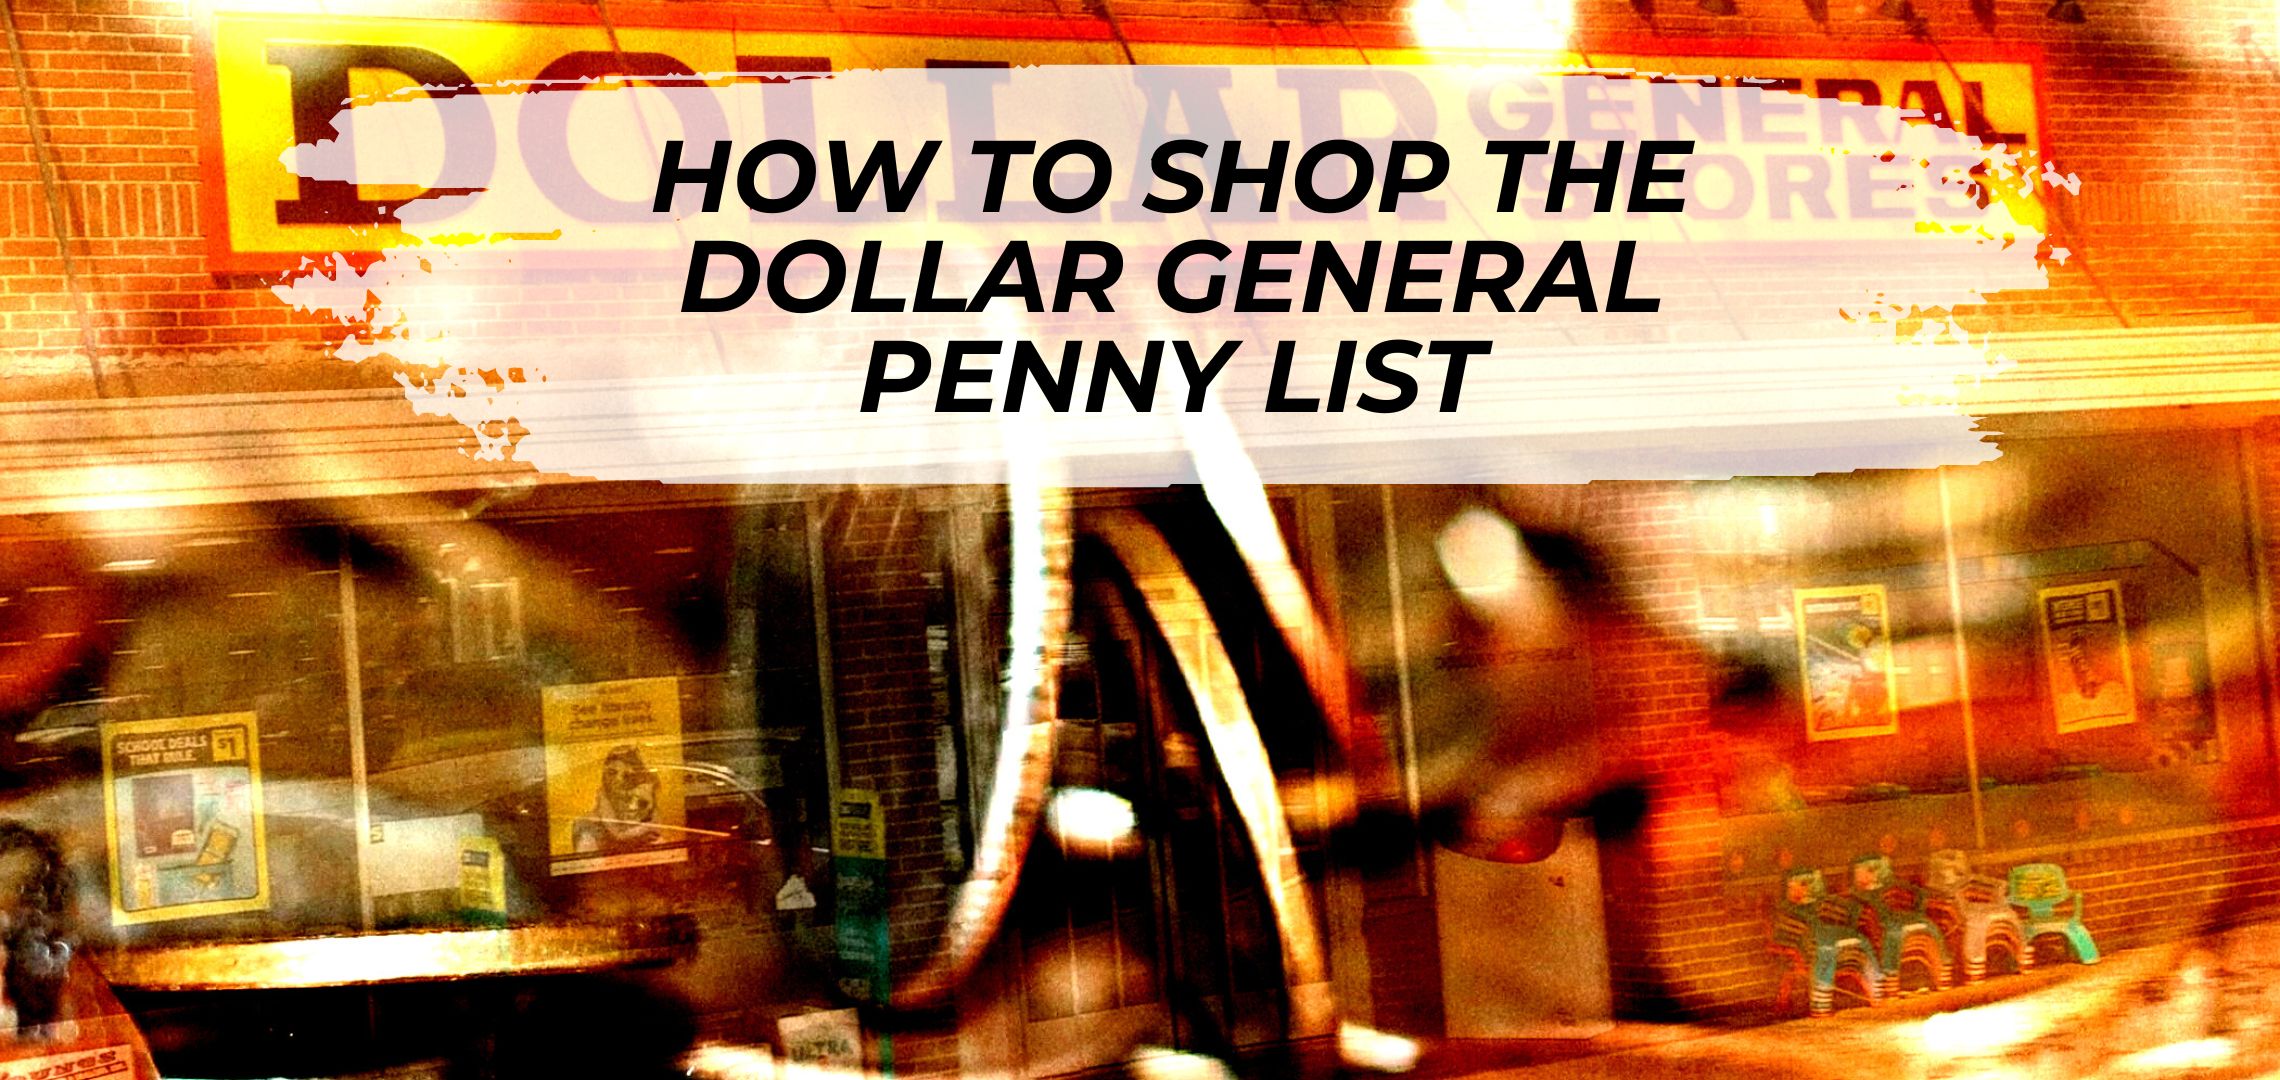 Dollar General Penny List Online